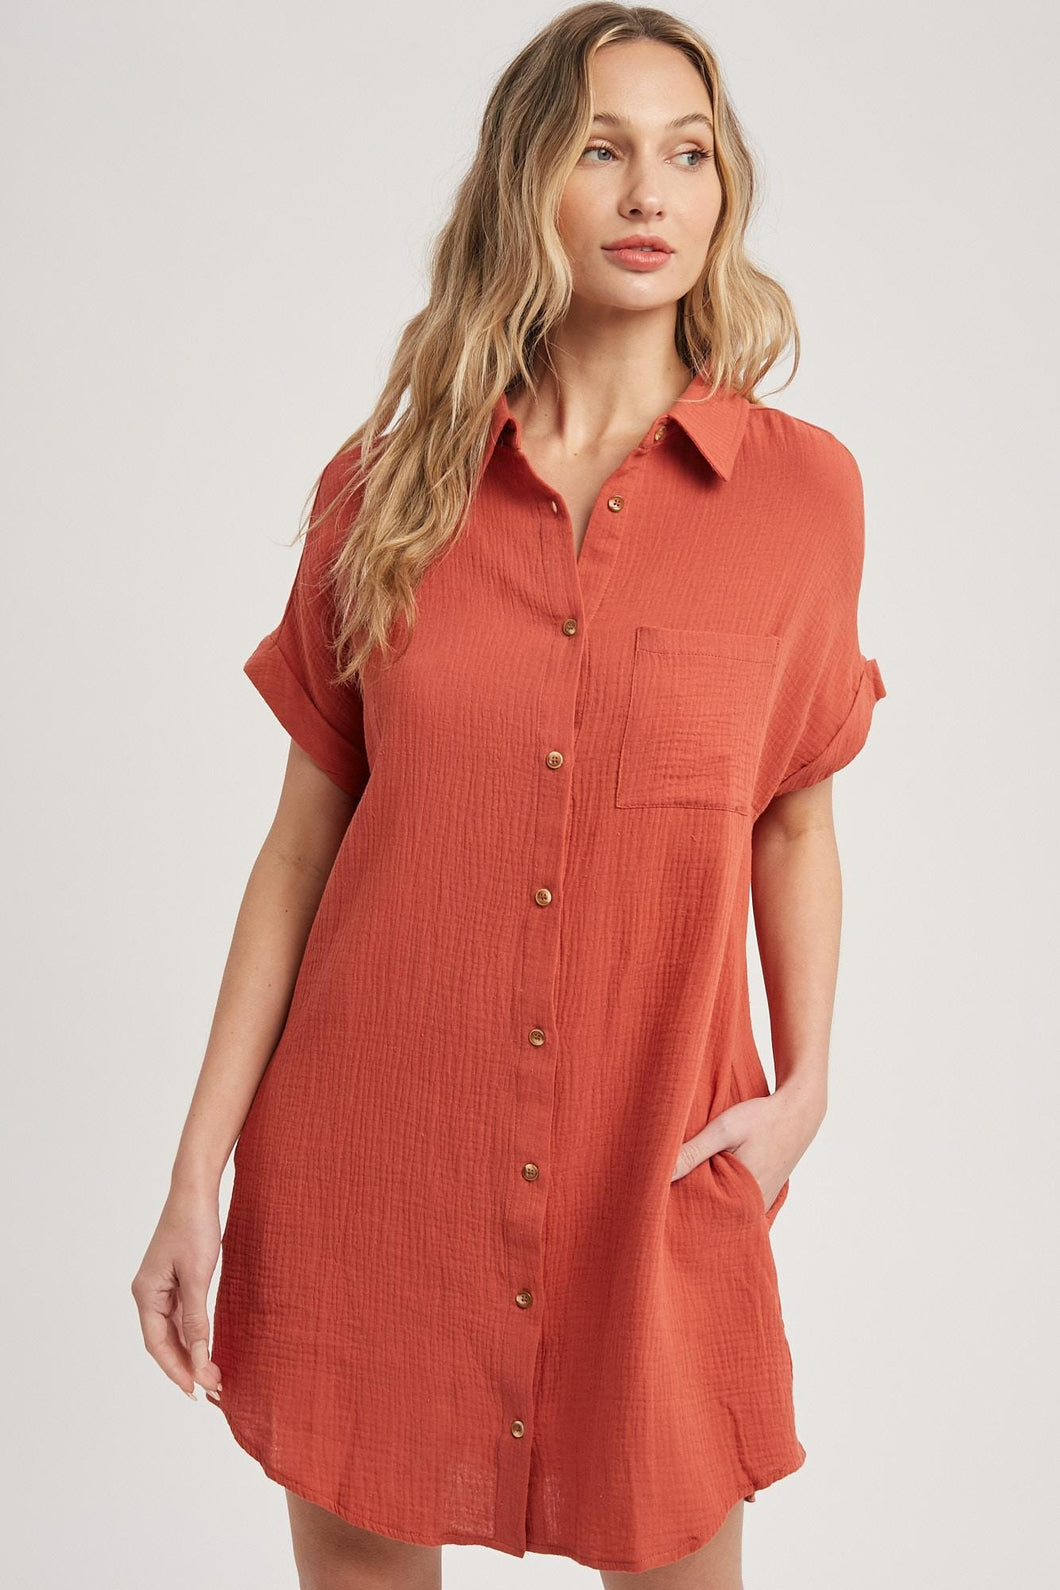 D01045 - Terracotta / Small - Short Sleeve Button Up Midi T-Shirt Dress - Blu Ivy